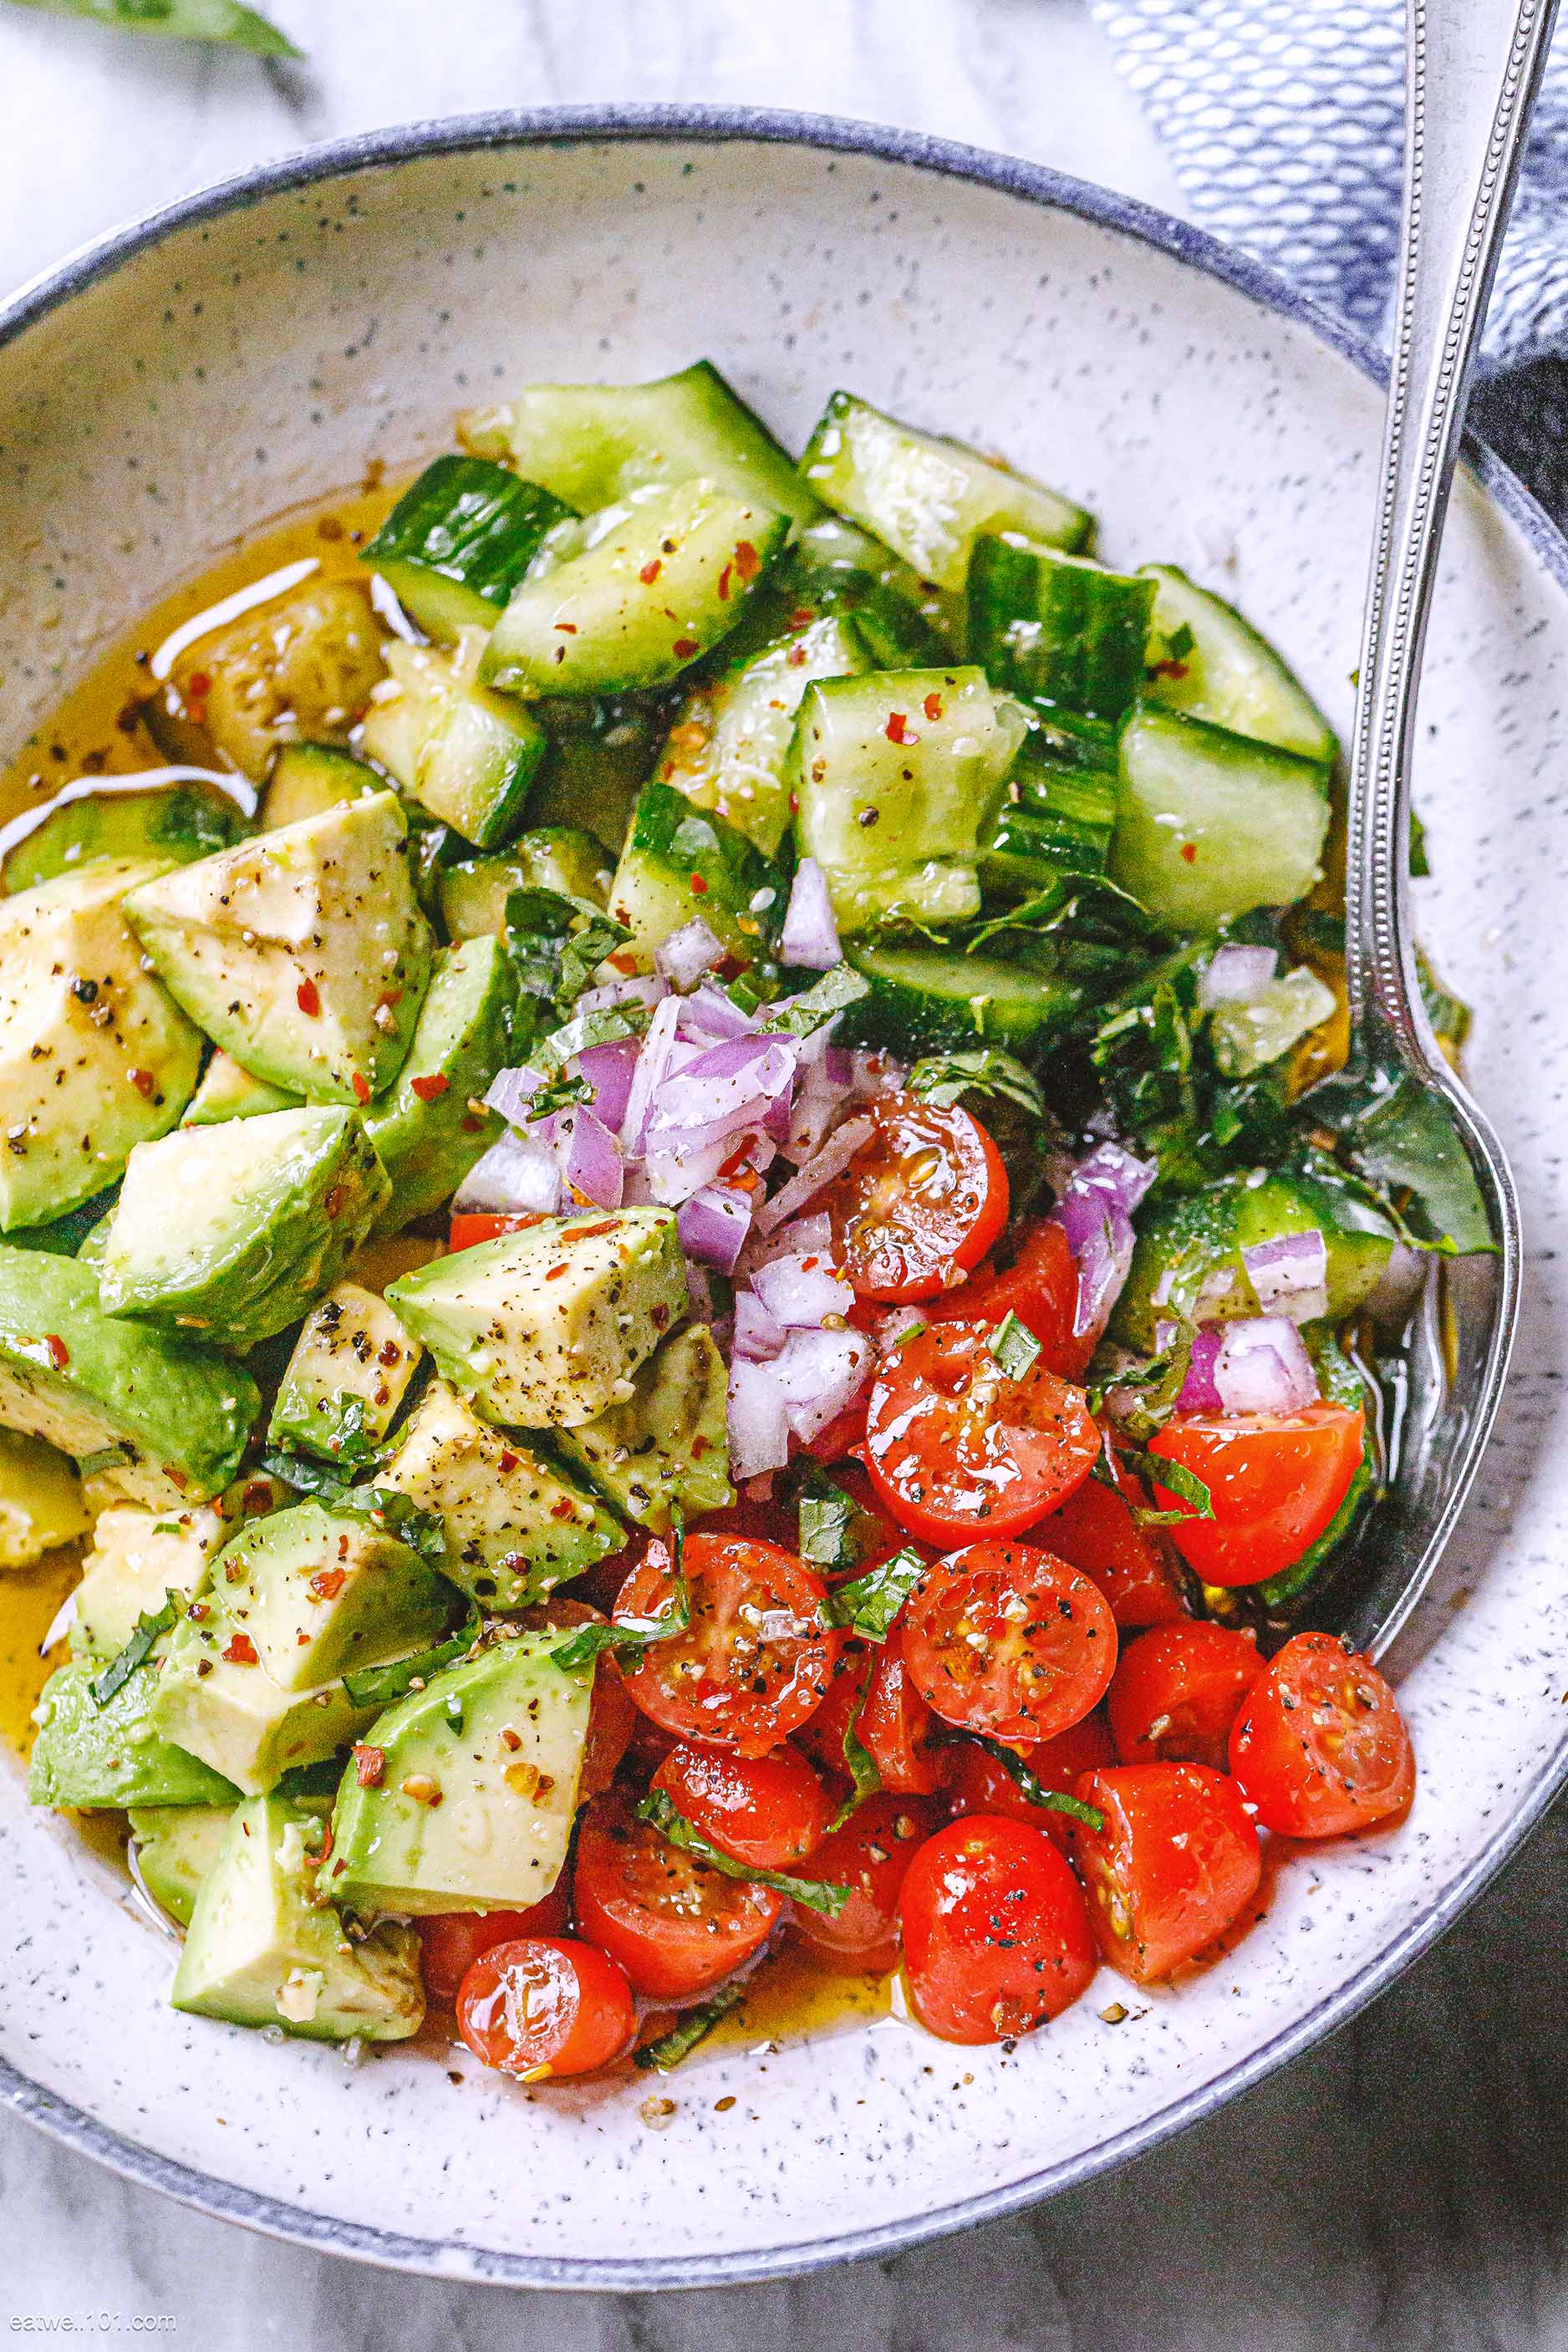 Healthy Cucumber Salad Recipe with Tomato, Avocado – Cucumber Salad ...